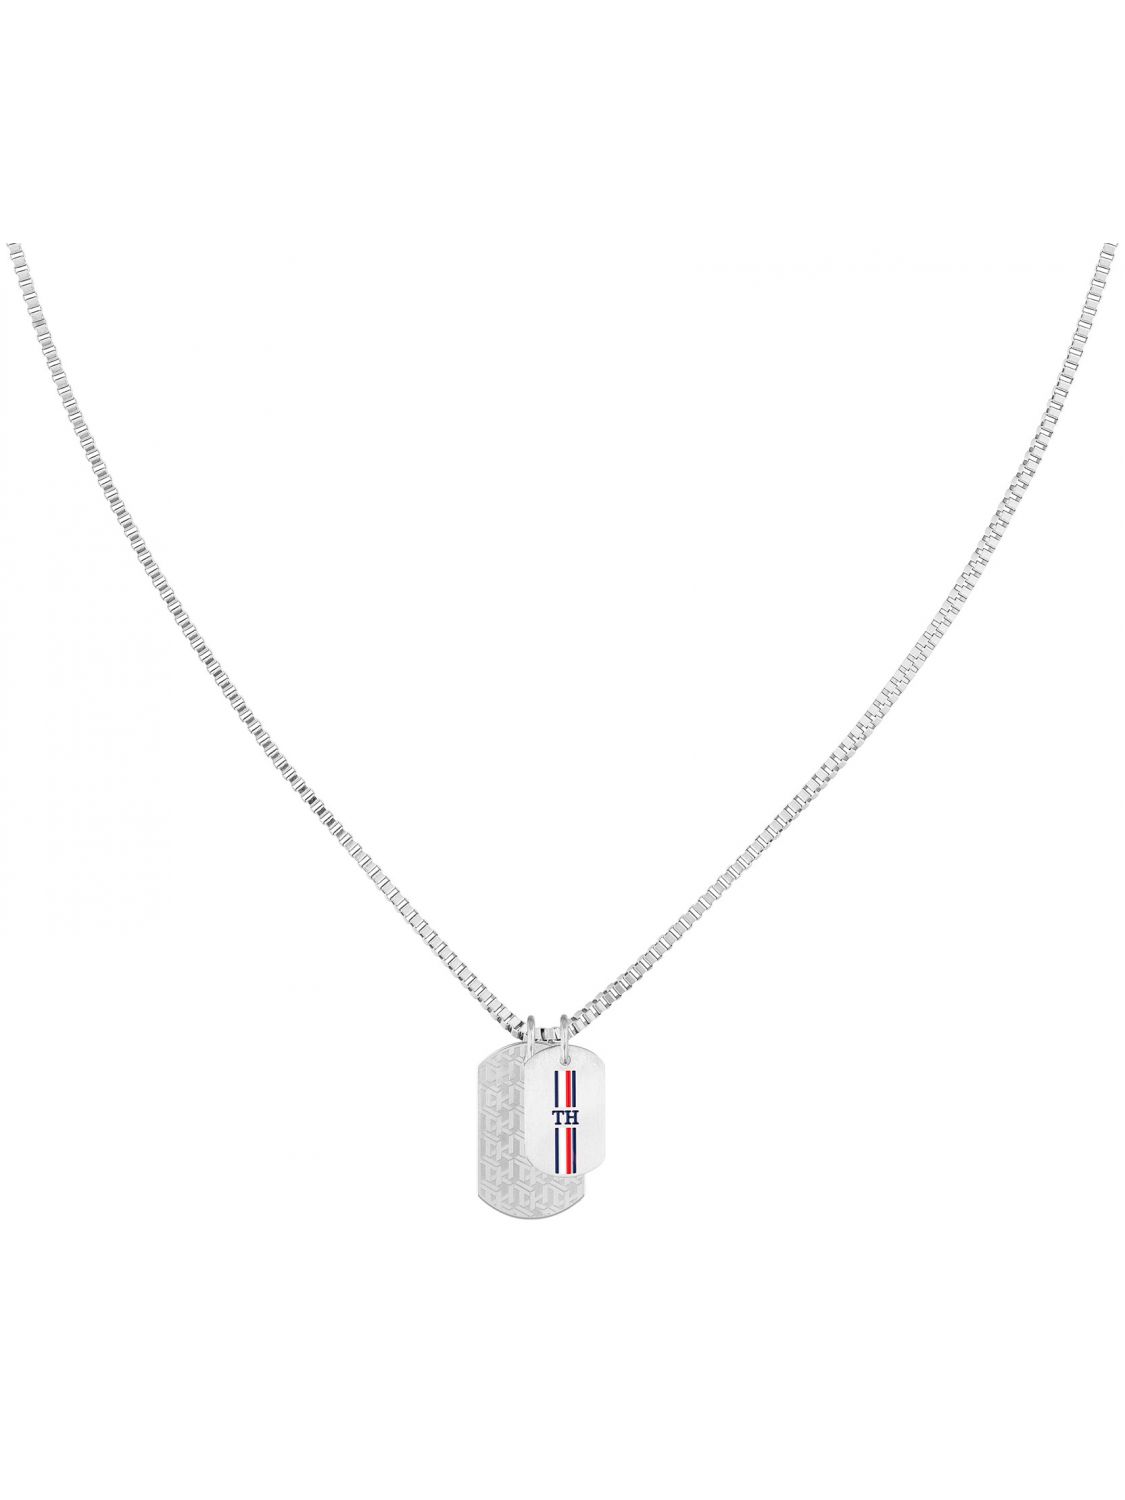 hilfiger necklace